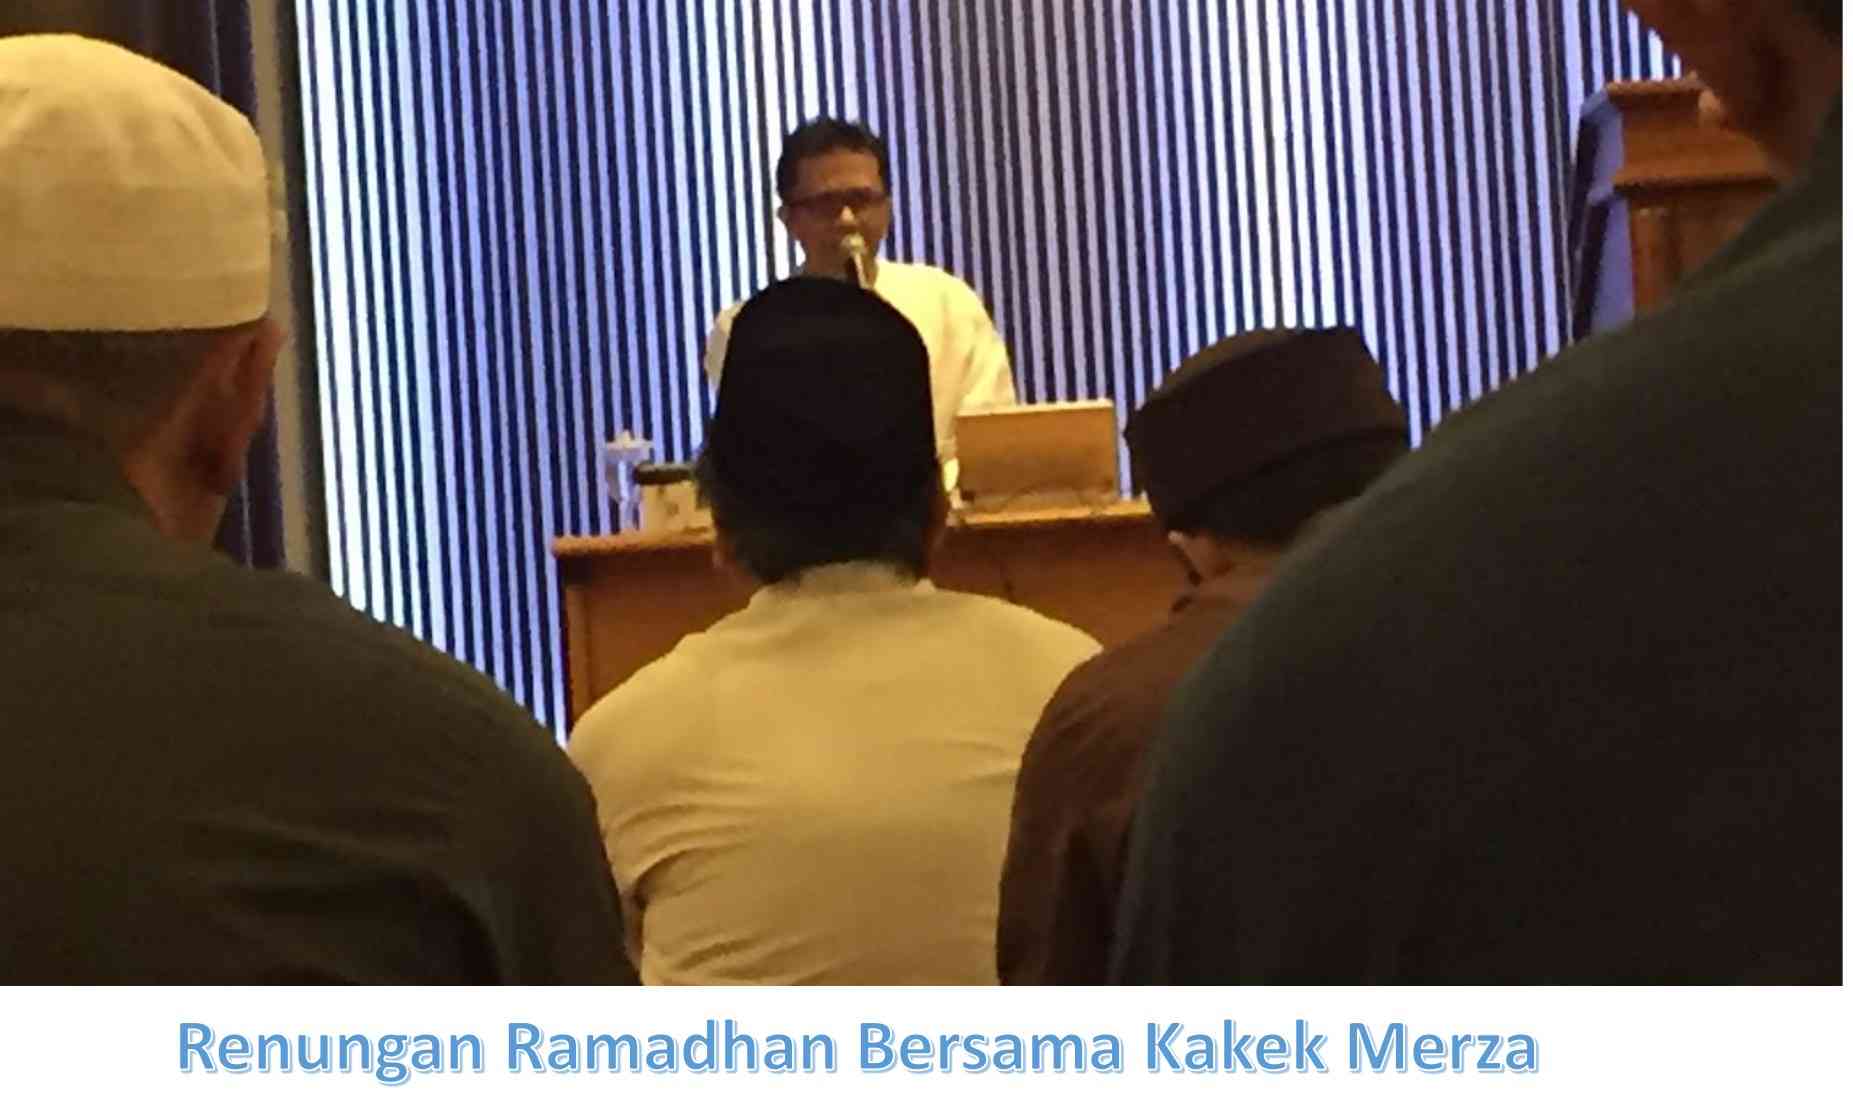 Renungan Ramadhan (04): Membantu Sesama untuk Menjadi Mukmin Sejati